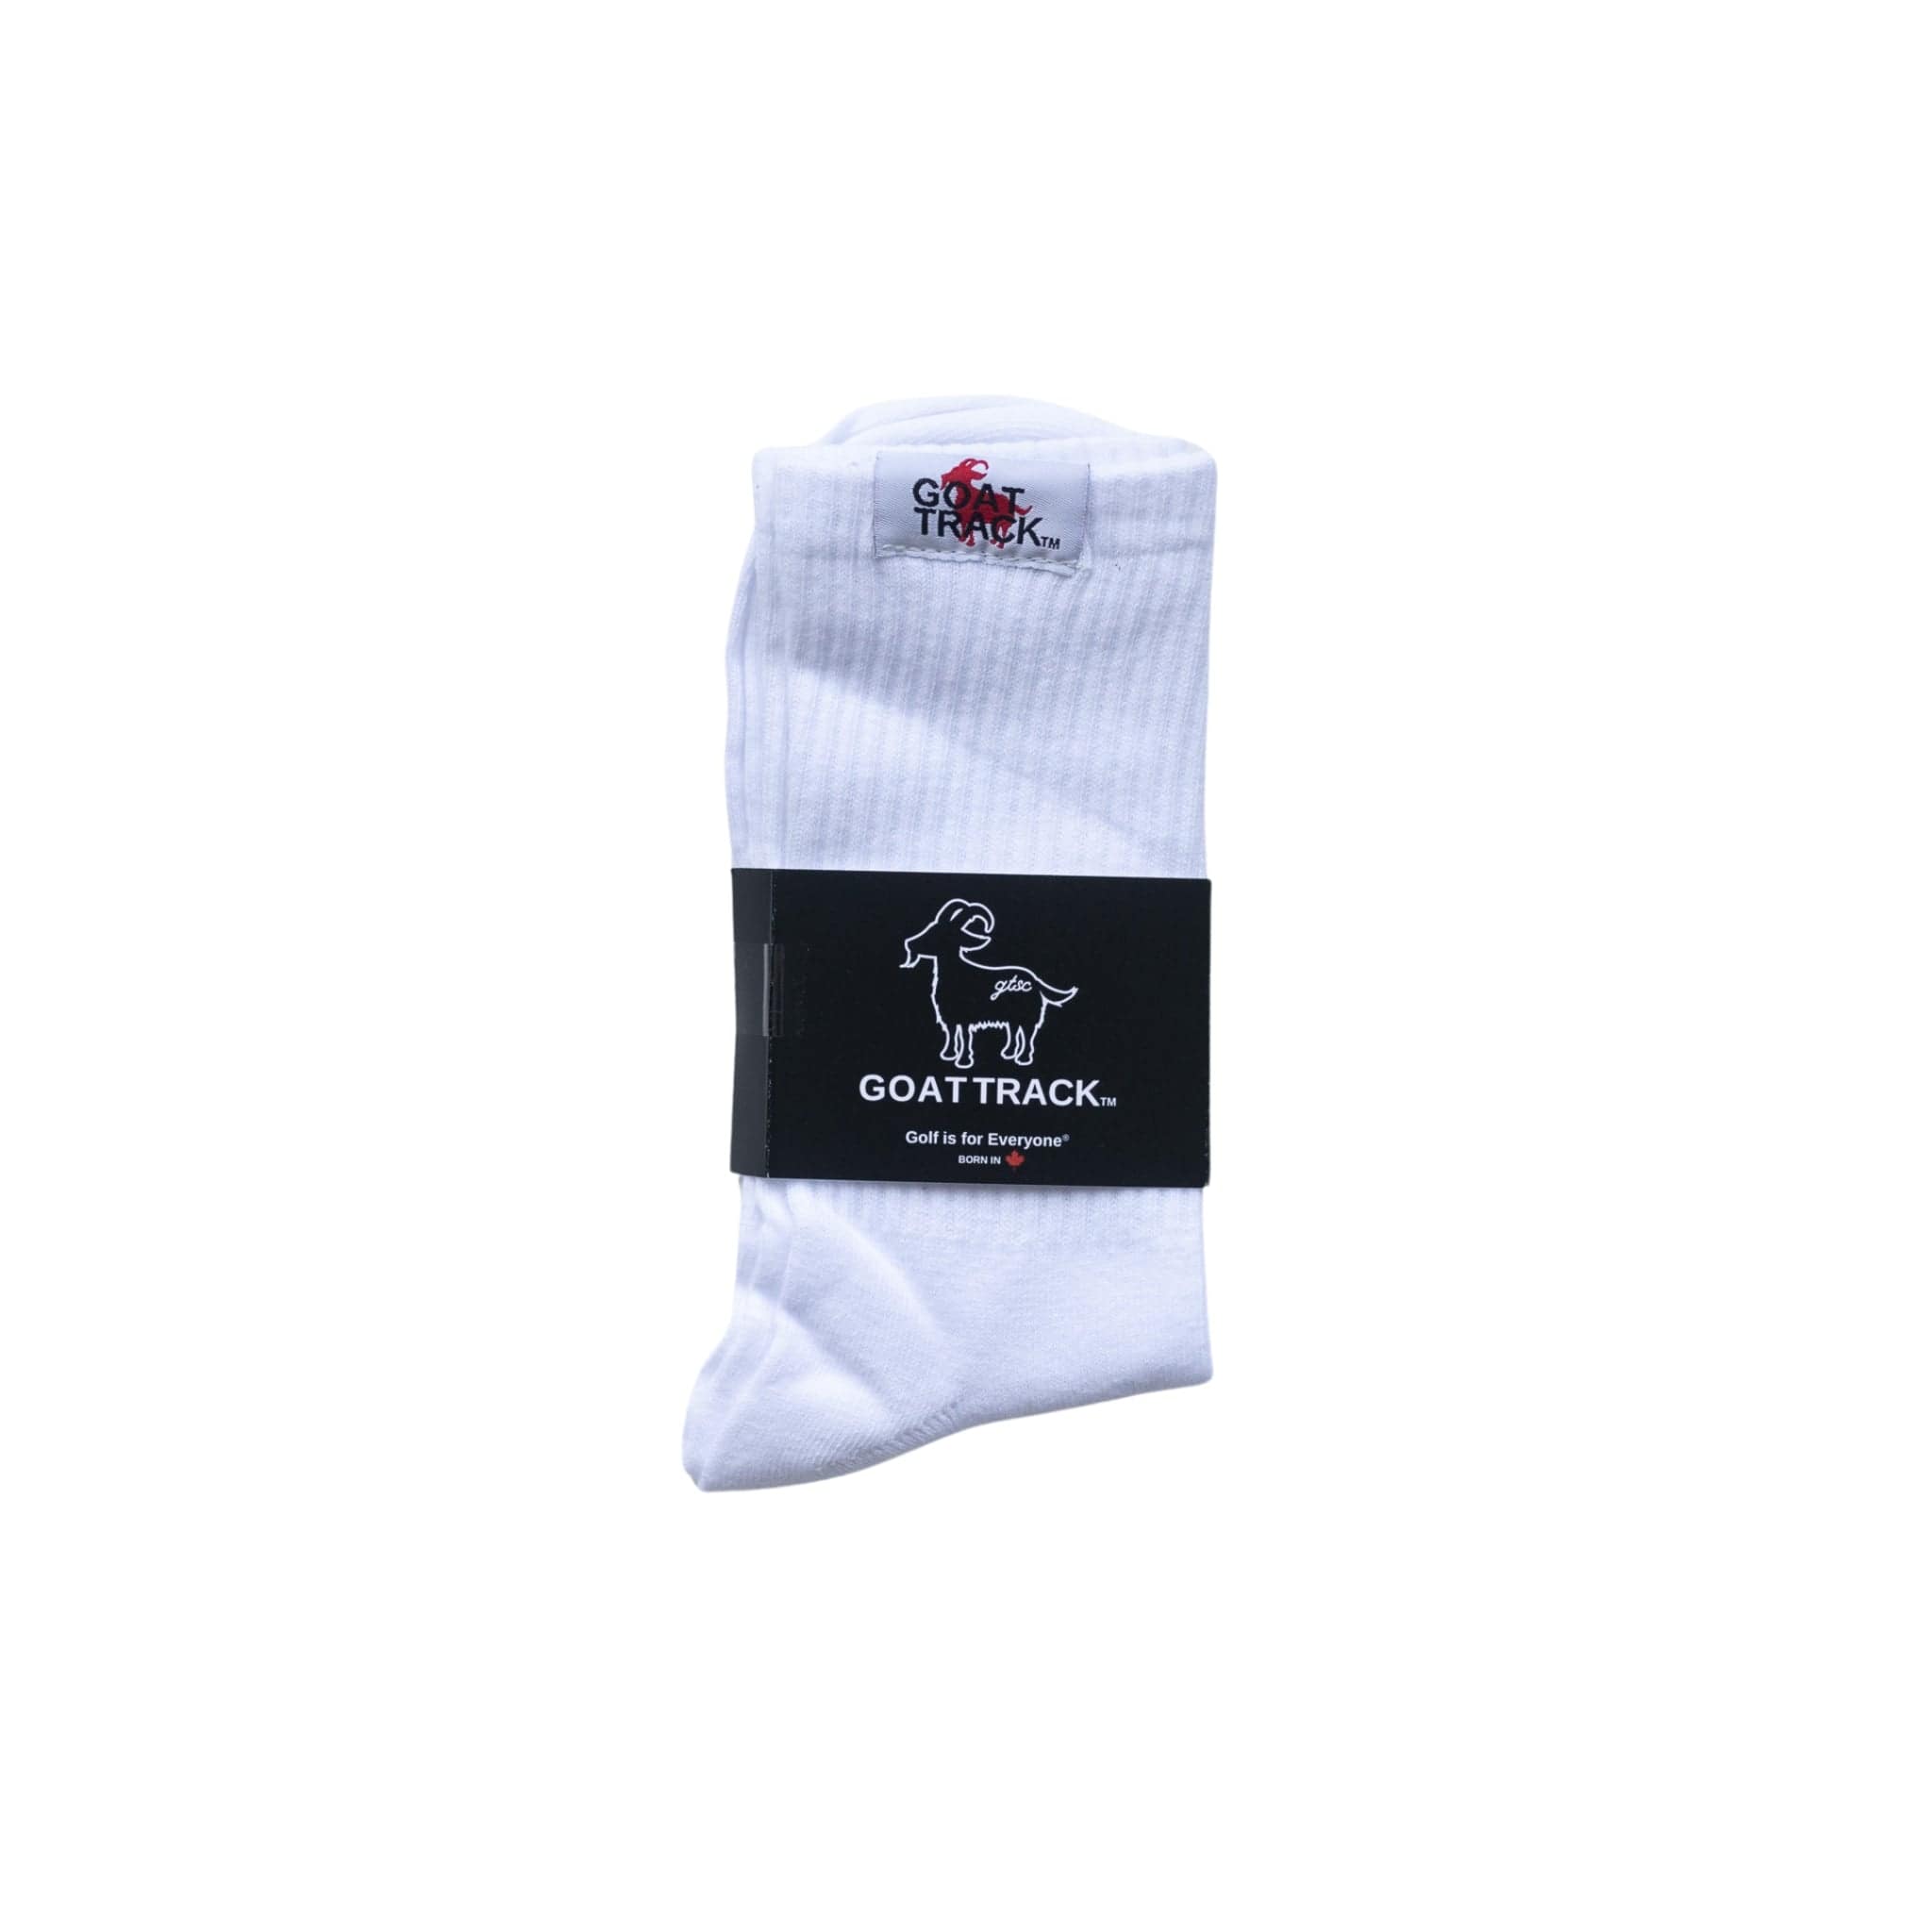 GT Everyday Socks socks Canada-Golf-Lifestyle-Clothing-Brand